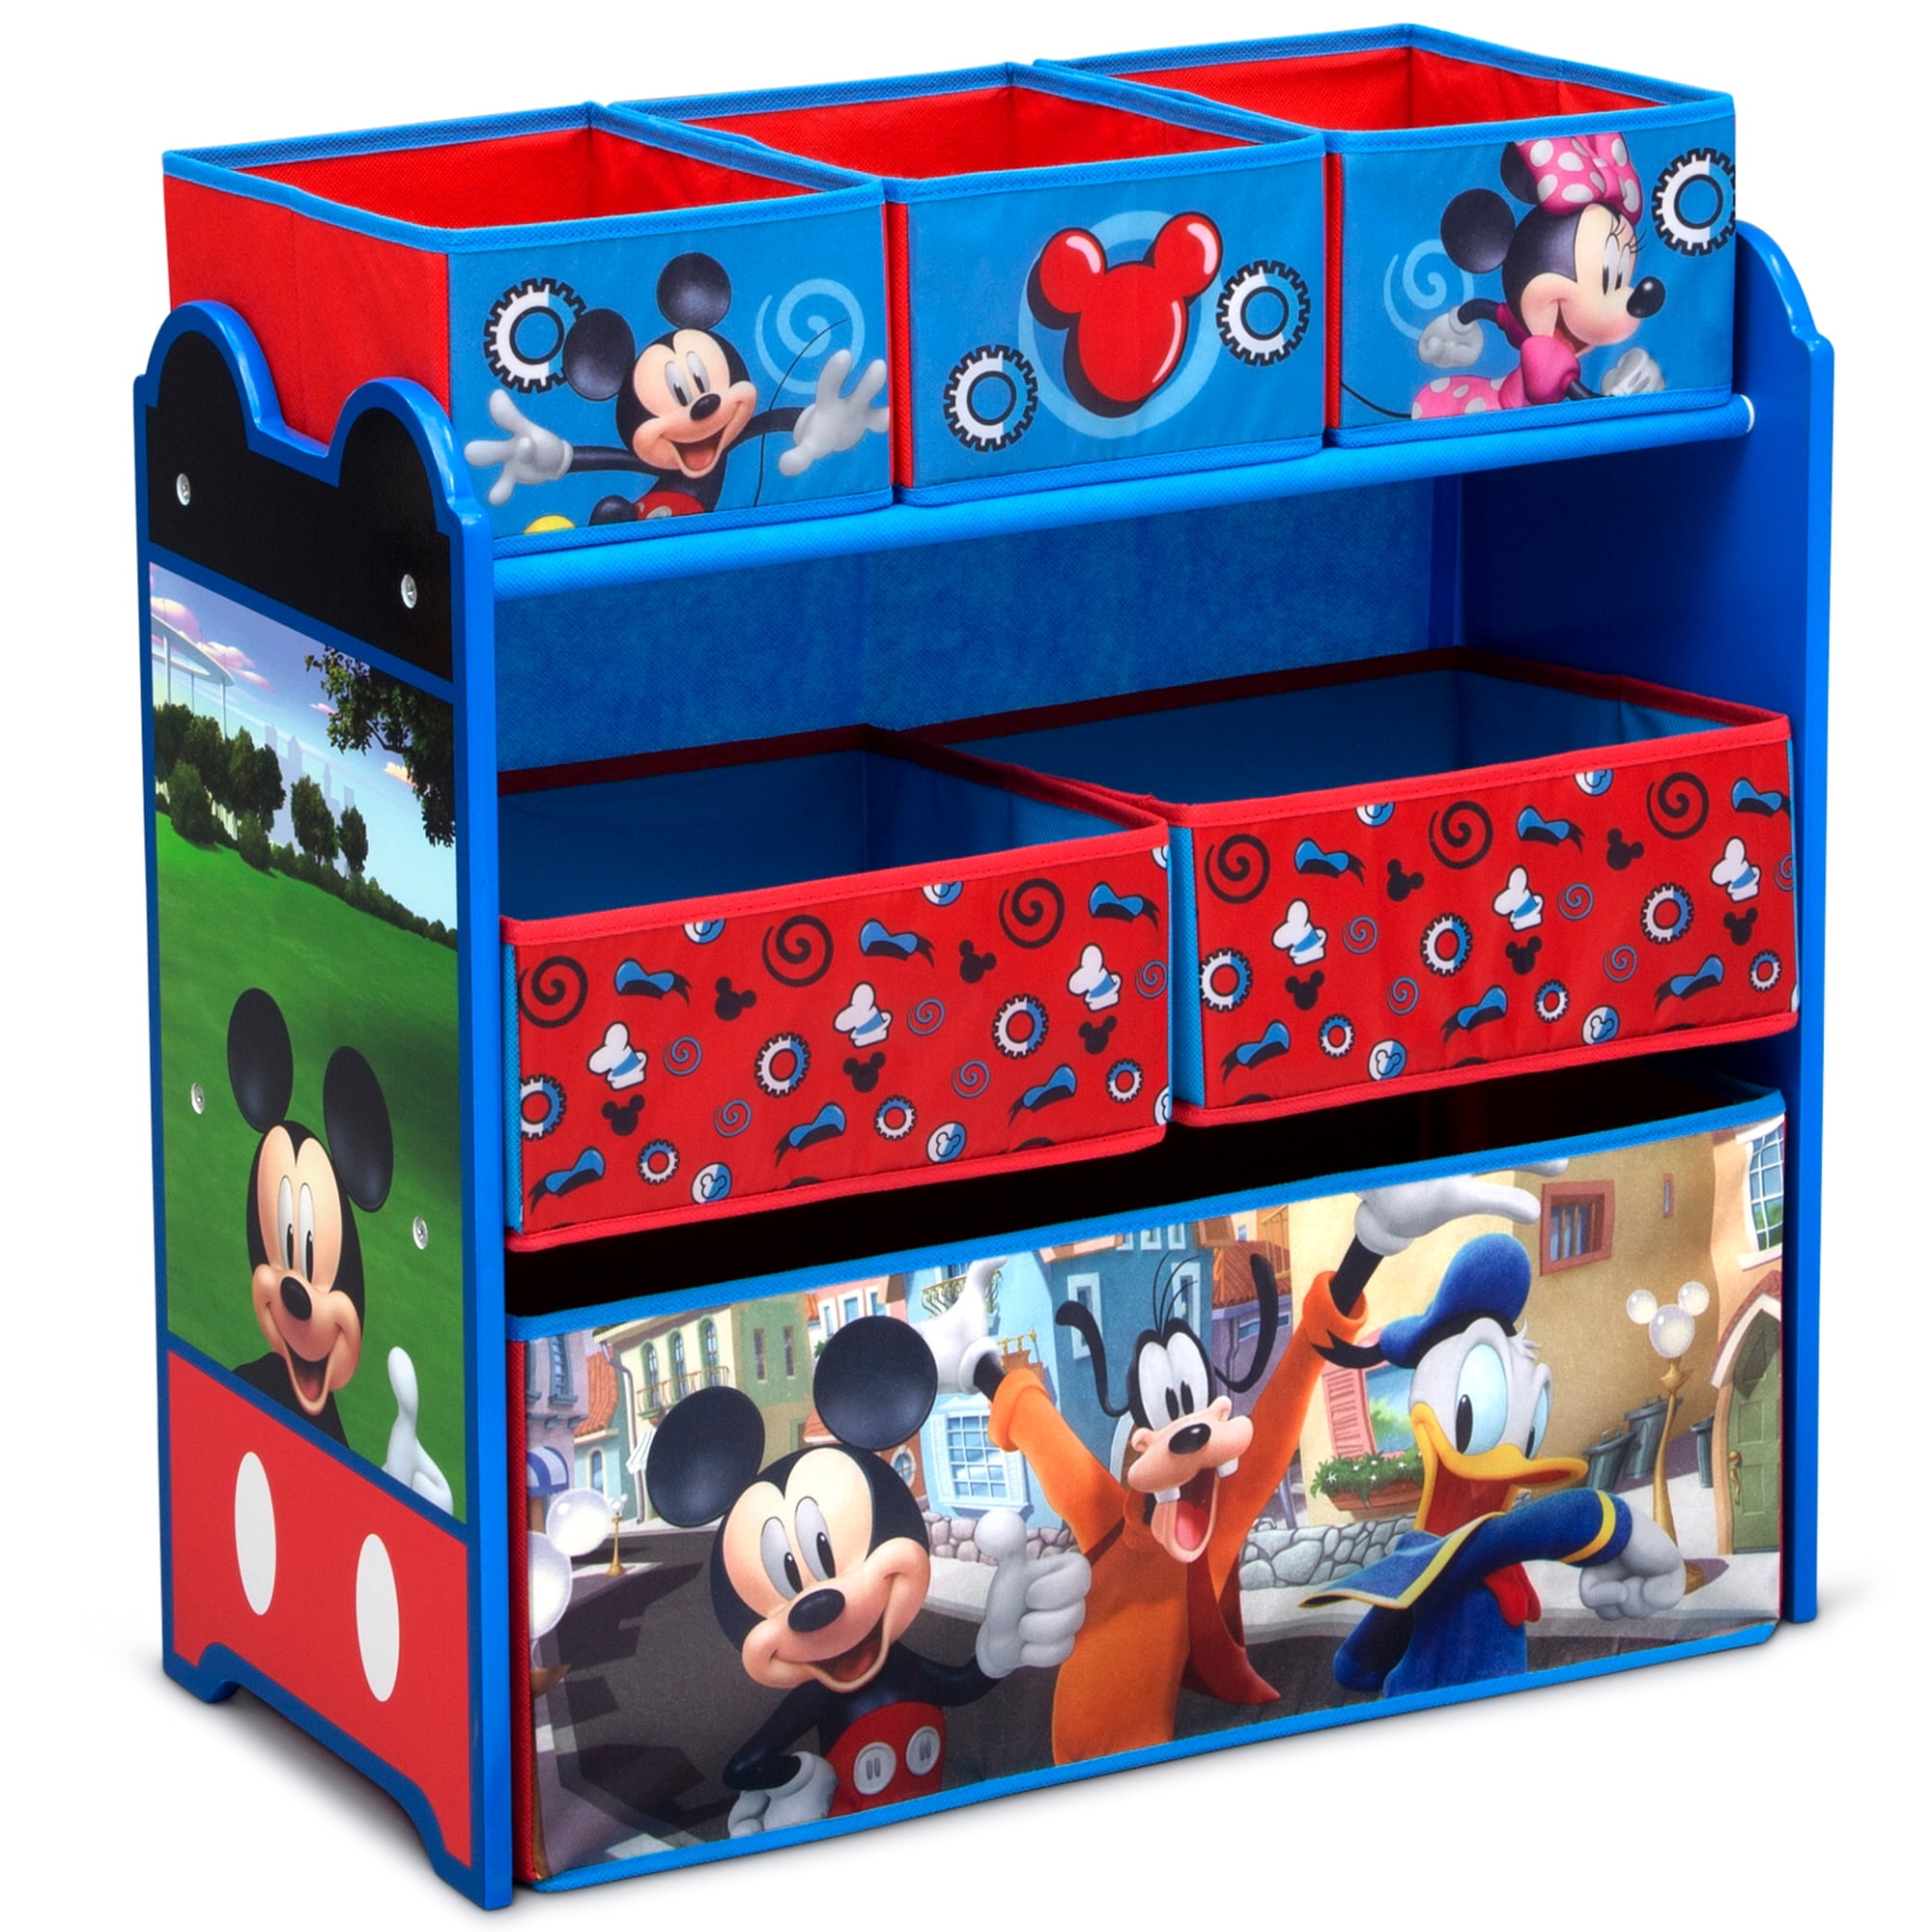 Disney Mickey Mouse 6 Bin Design and Store Toy Organizer by Delta Children